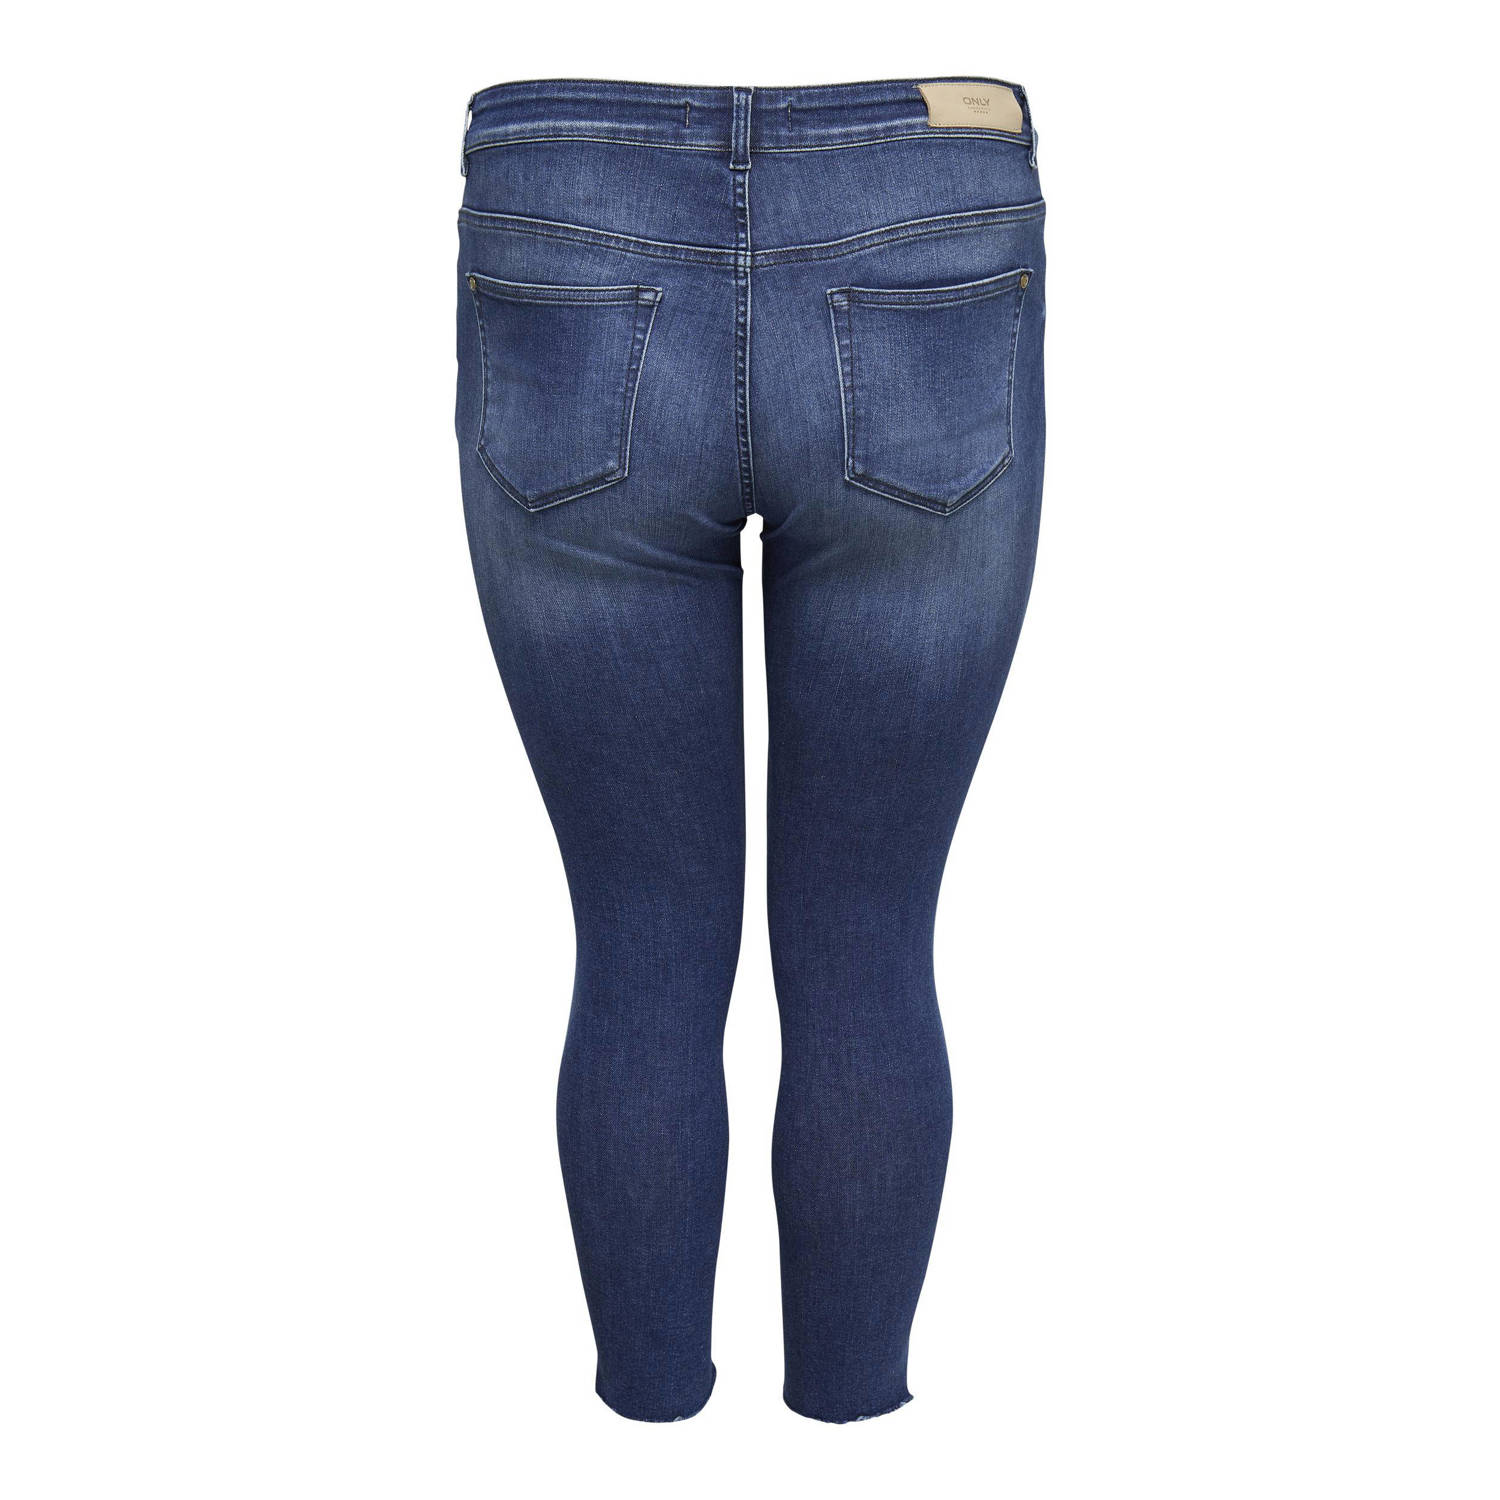 ONLY CARMAKOMA skinny jeans medium blue denim